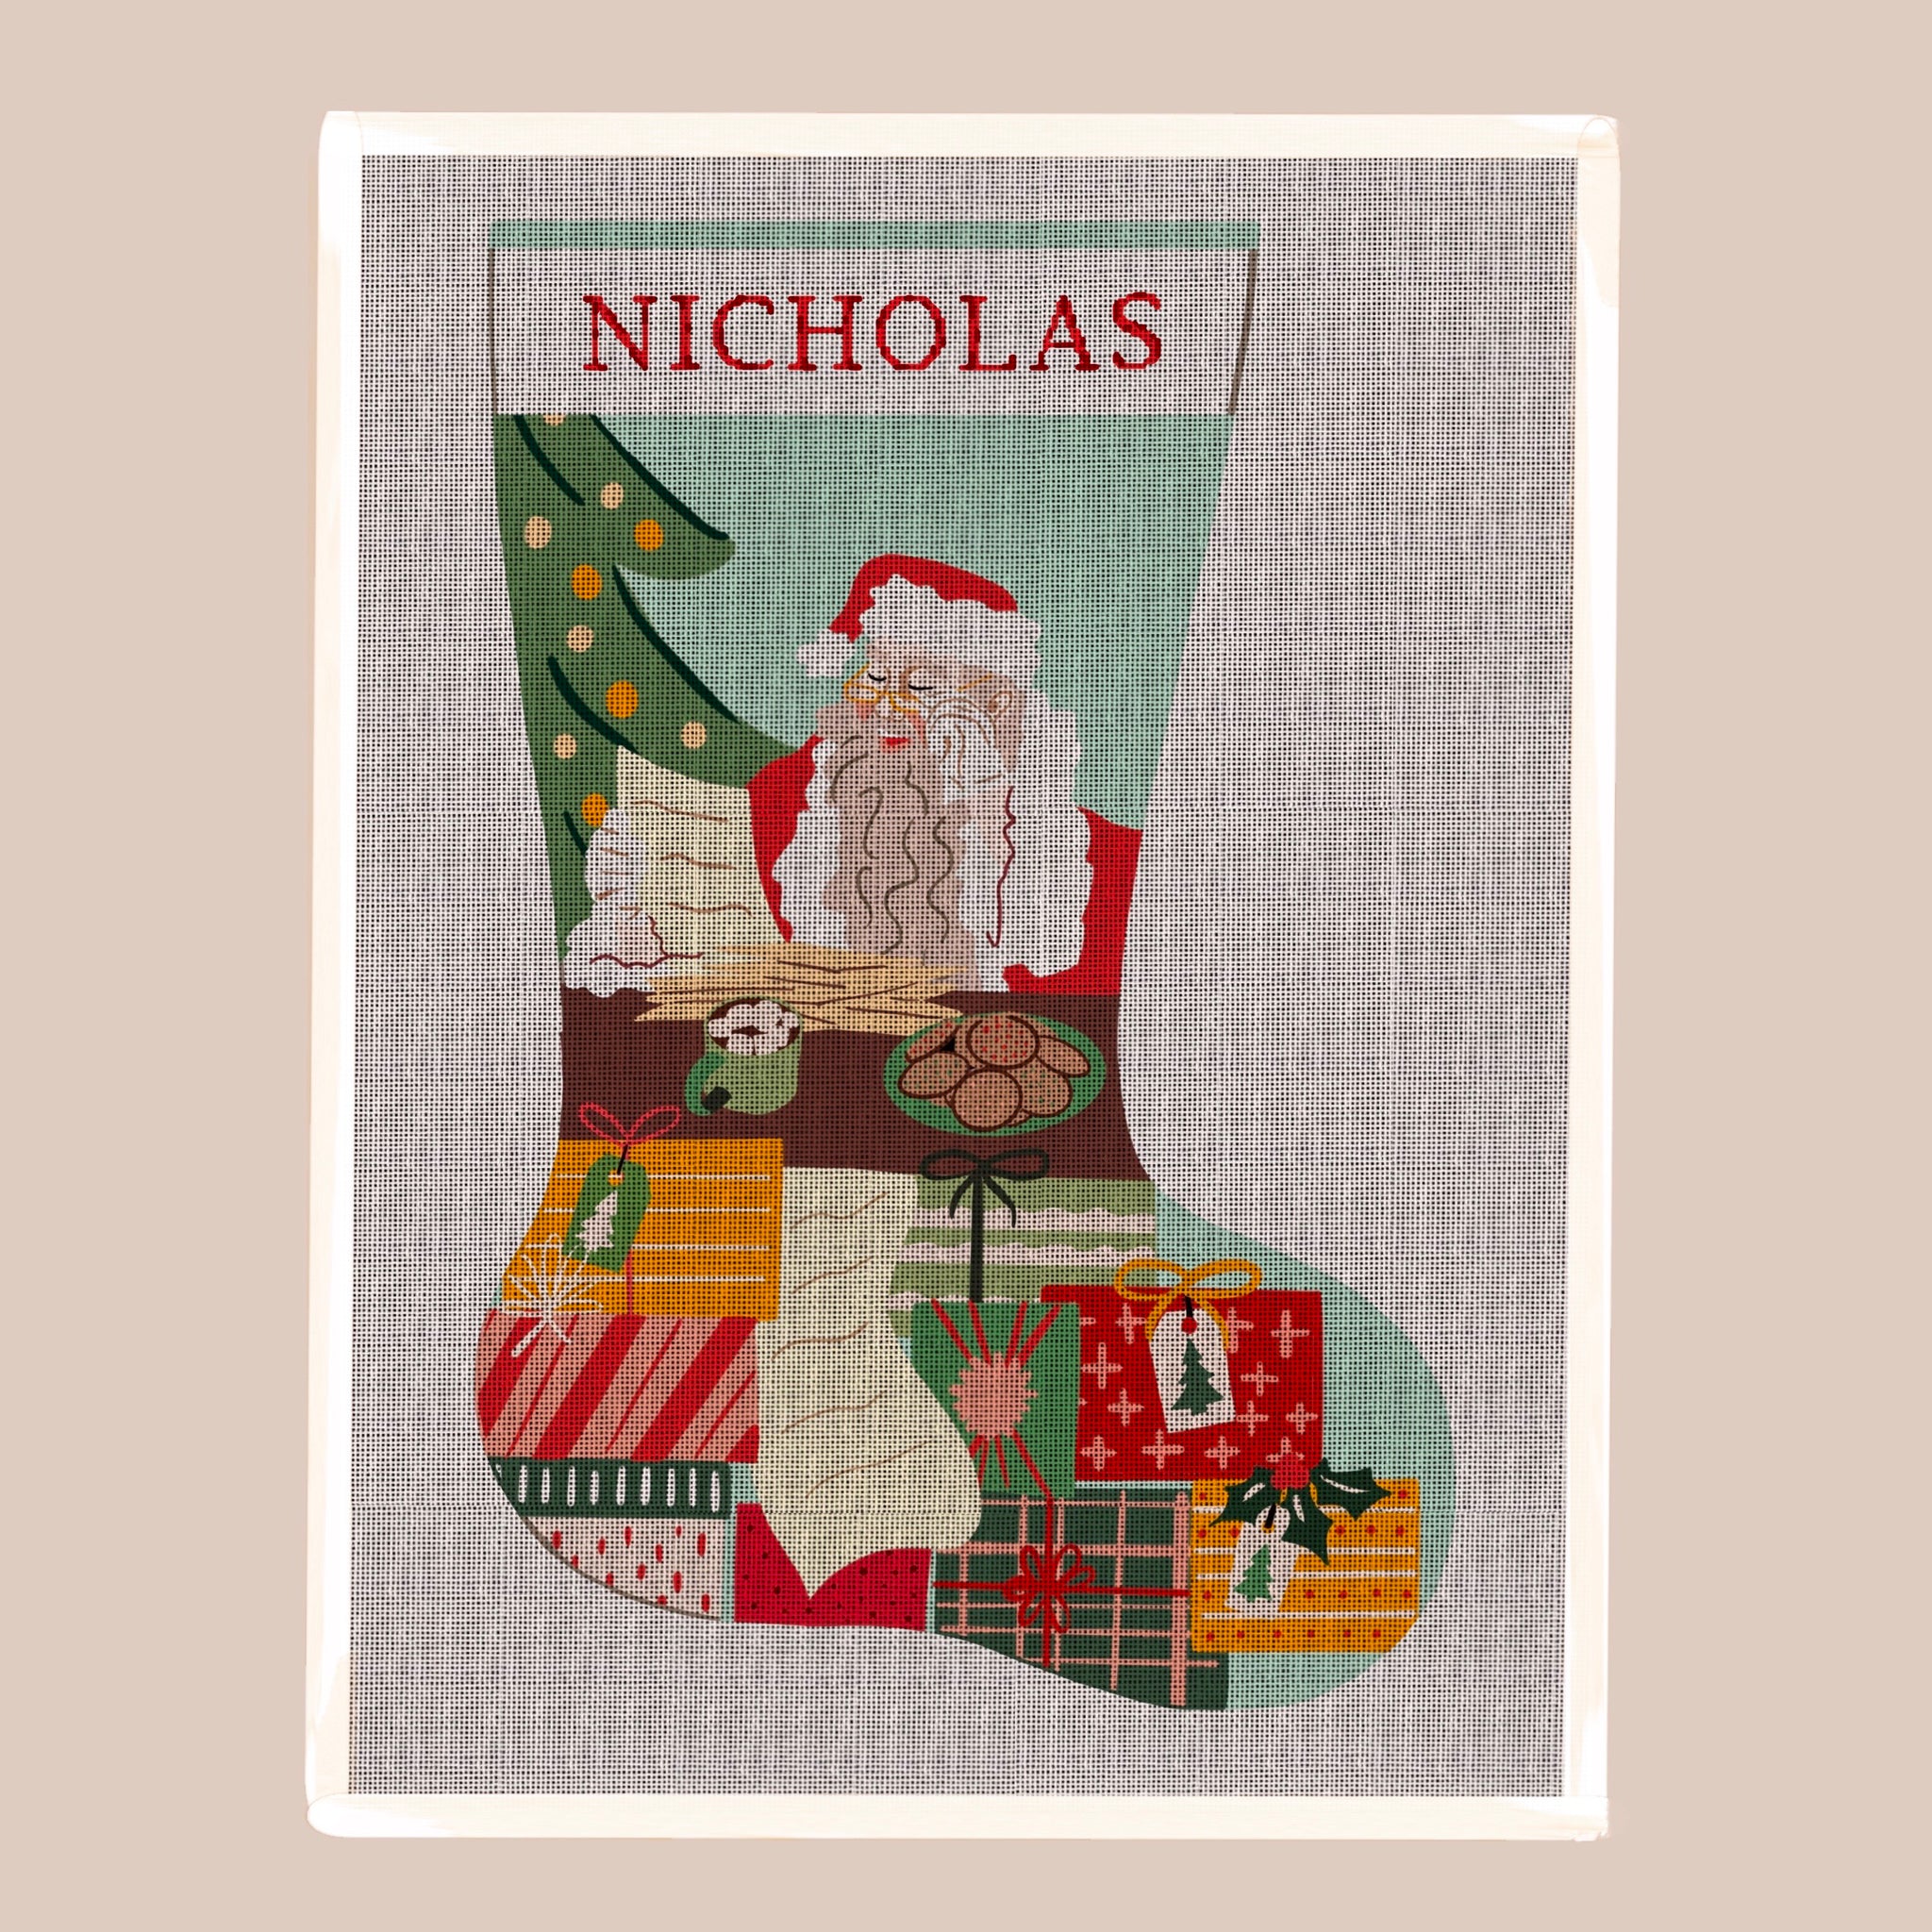 Old Saint Nick, Needlepoint Christmas Stocking